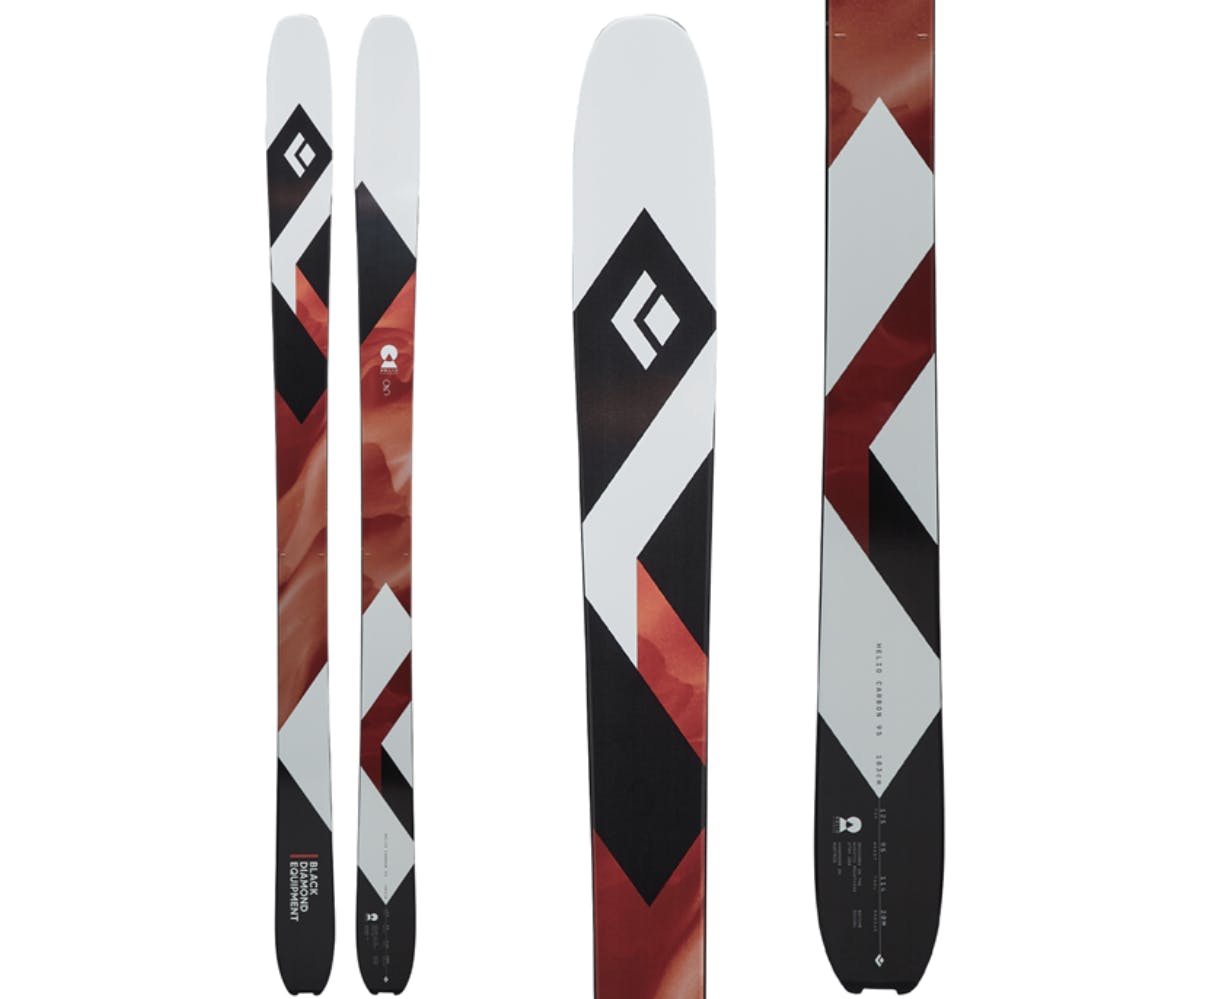 The Black Diamond Helio Carbon 95 Skis.